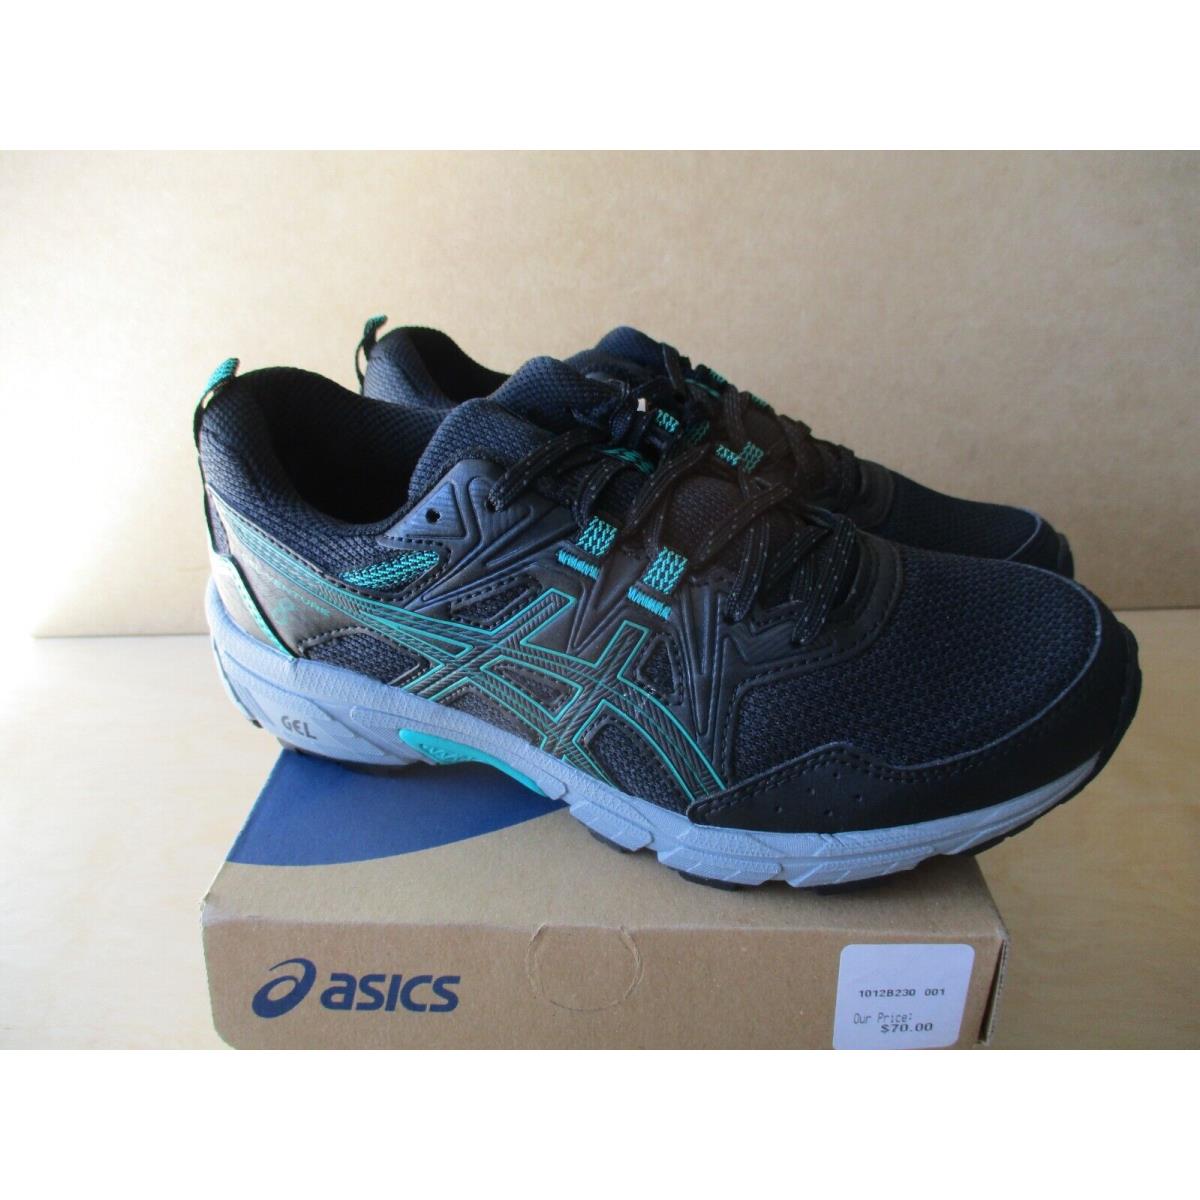 Asics Womens Gel-venture 8 Black Baltic Jewel Running Shoes Size 6.5 1012b230